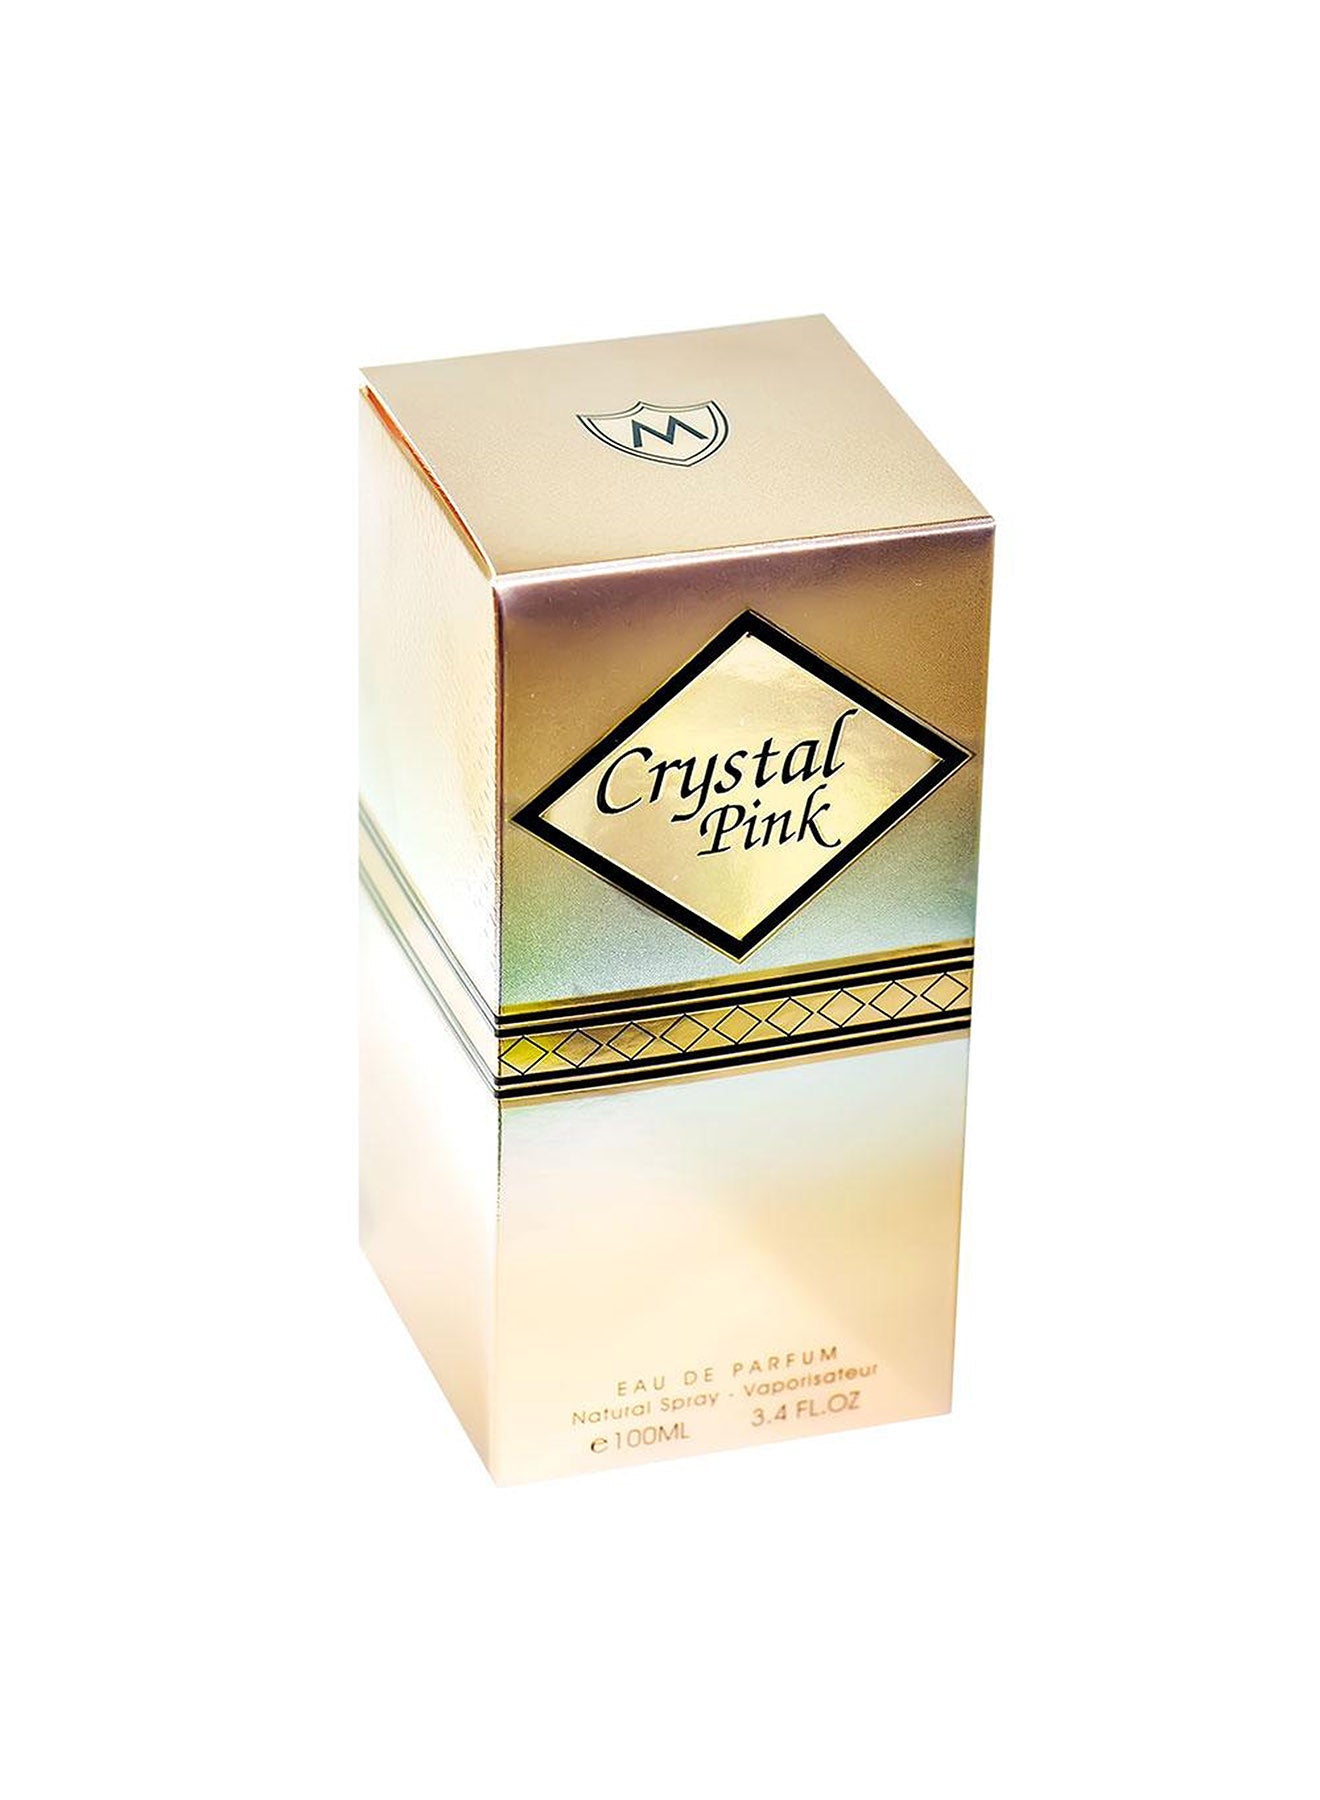 Crystal Pink Eau De Parfum 100ml Value Pack of 4 